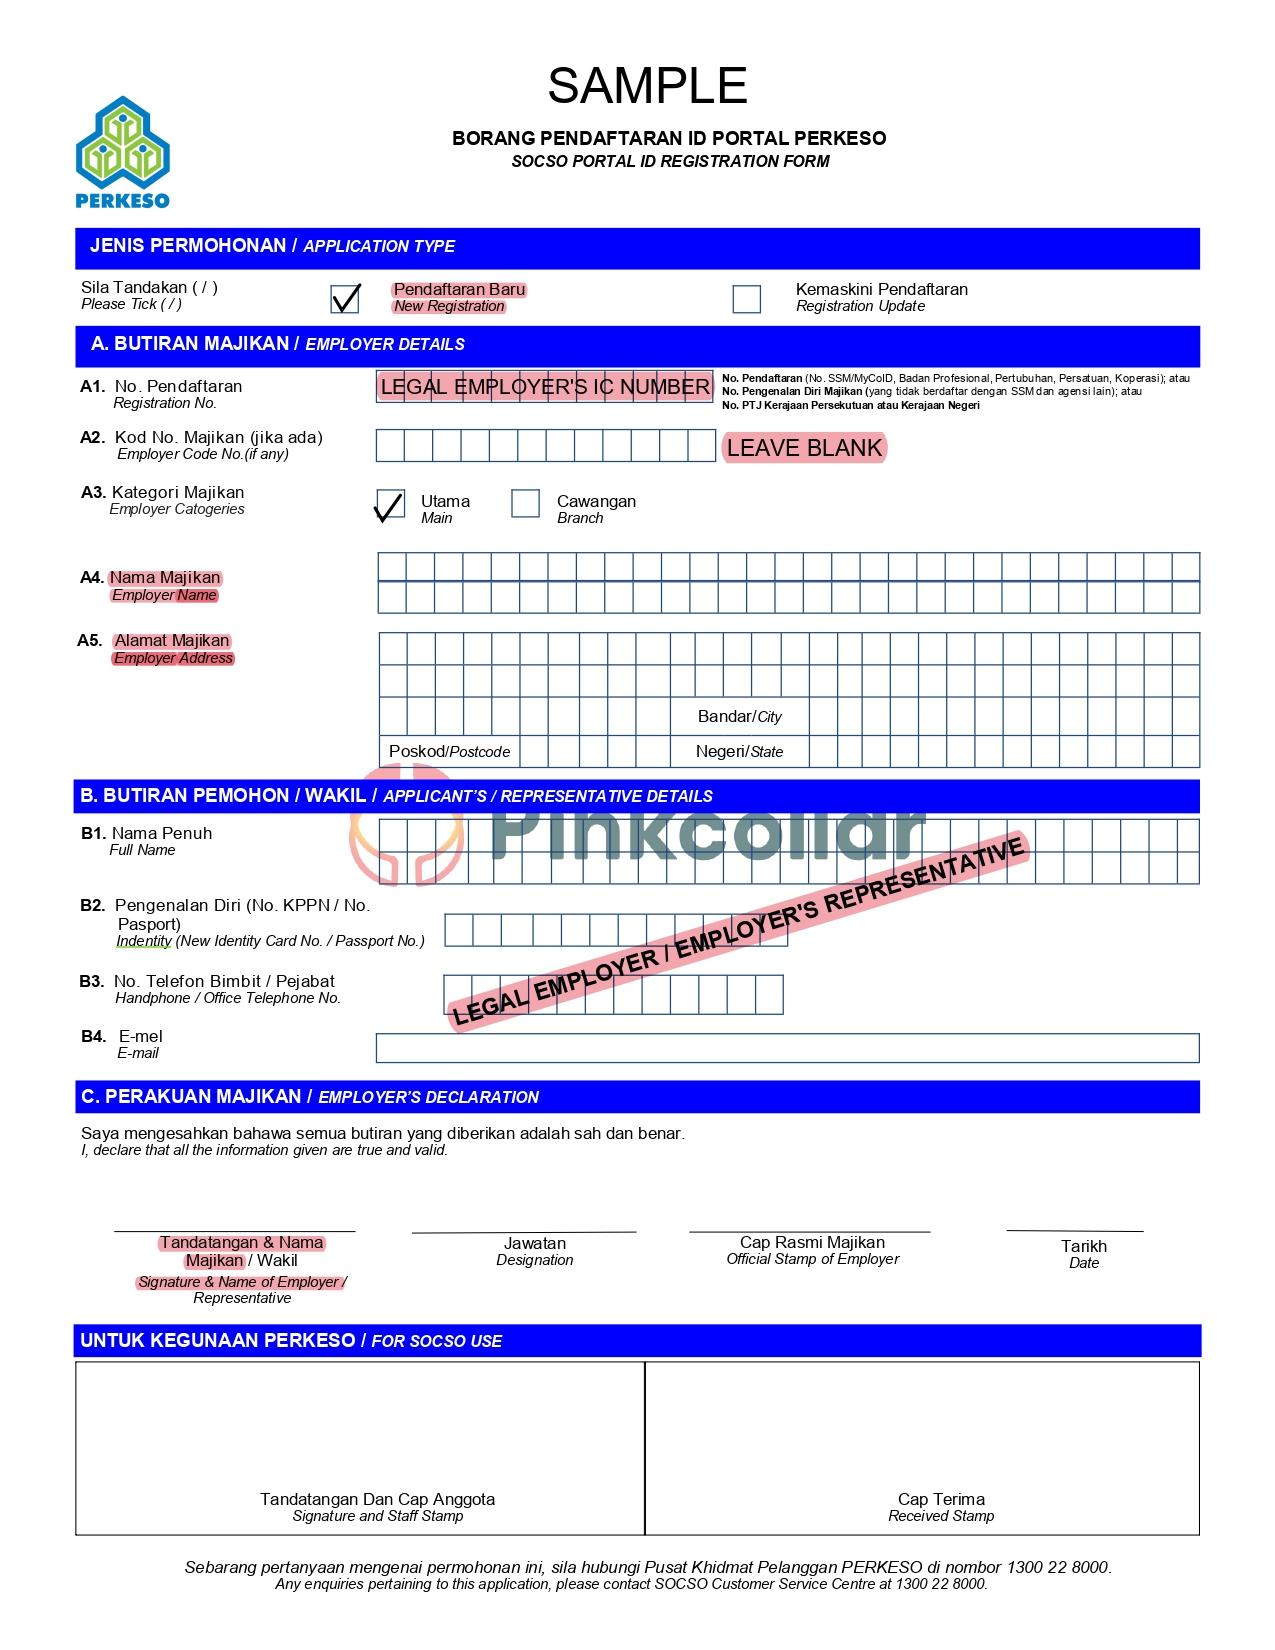 Guide for Borang Pendaftaran ID Portal PERKESO / Portal ID Registration Form